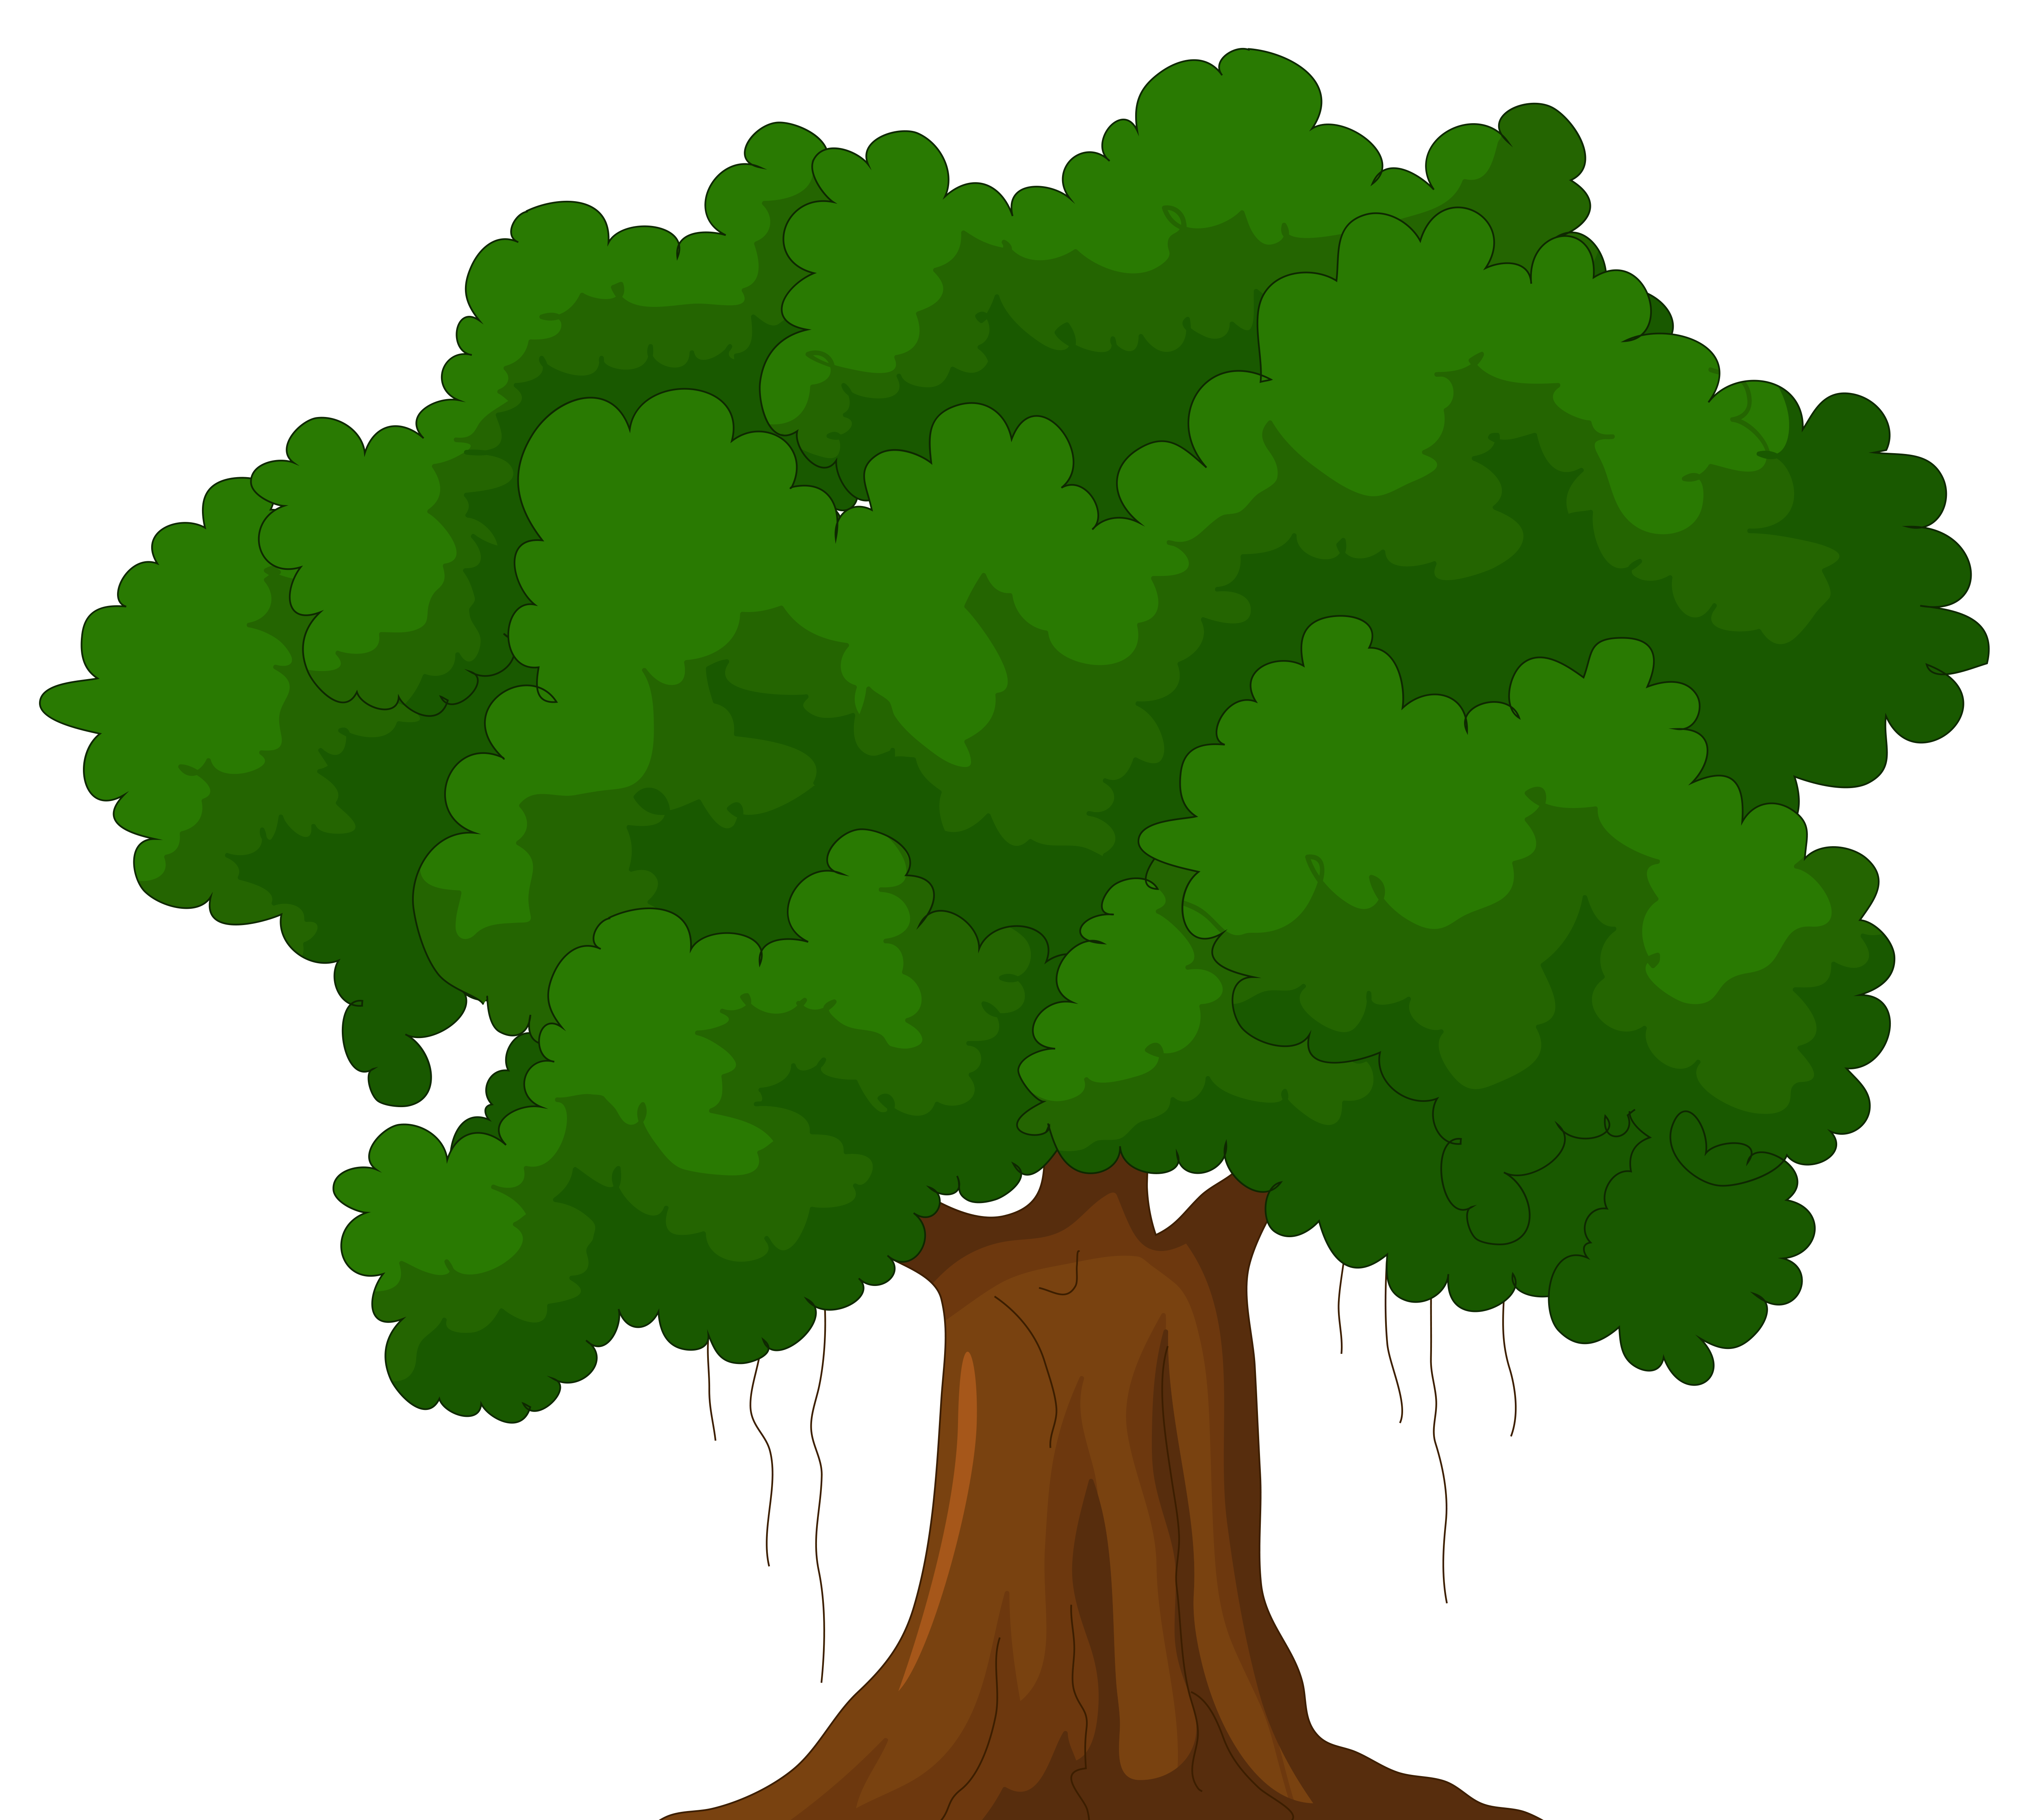 animated tree clipart